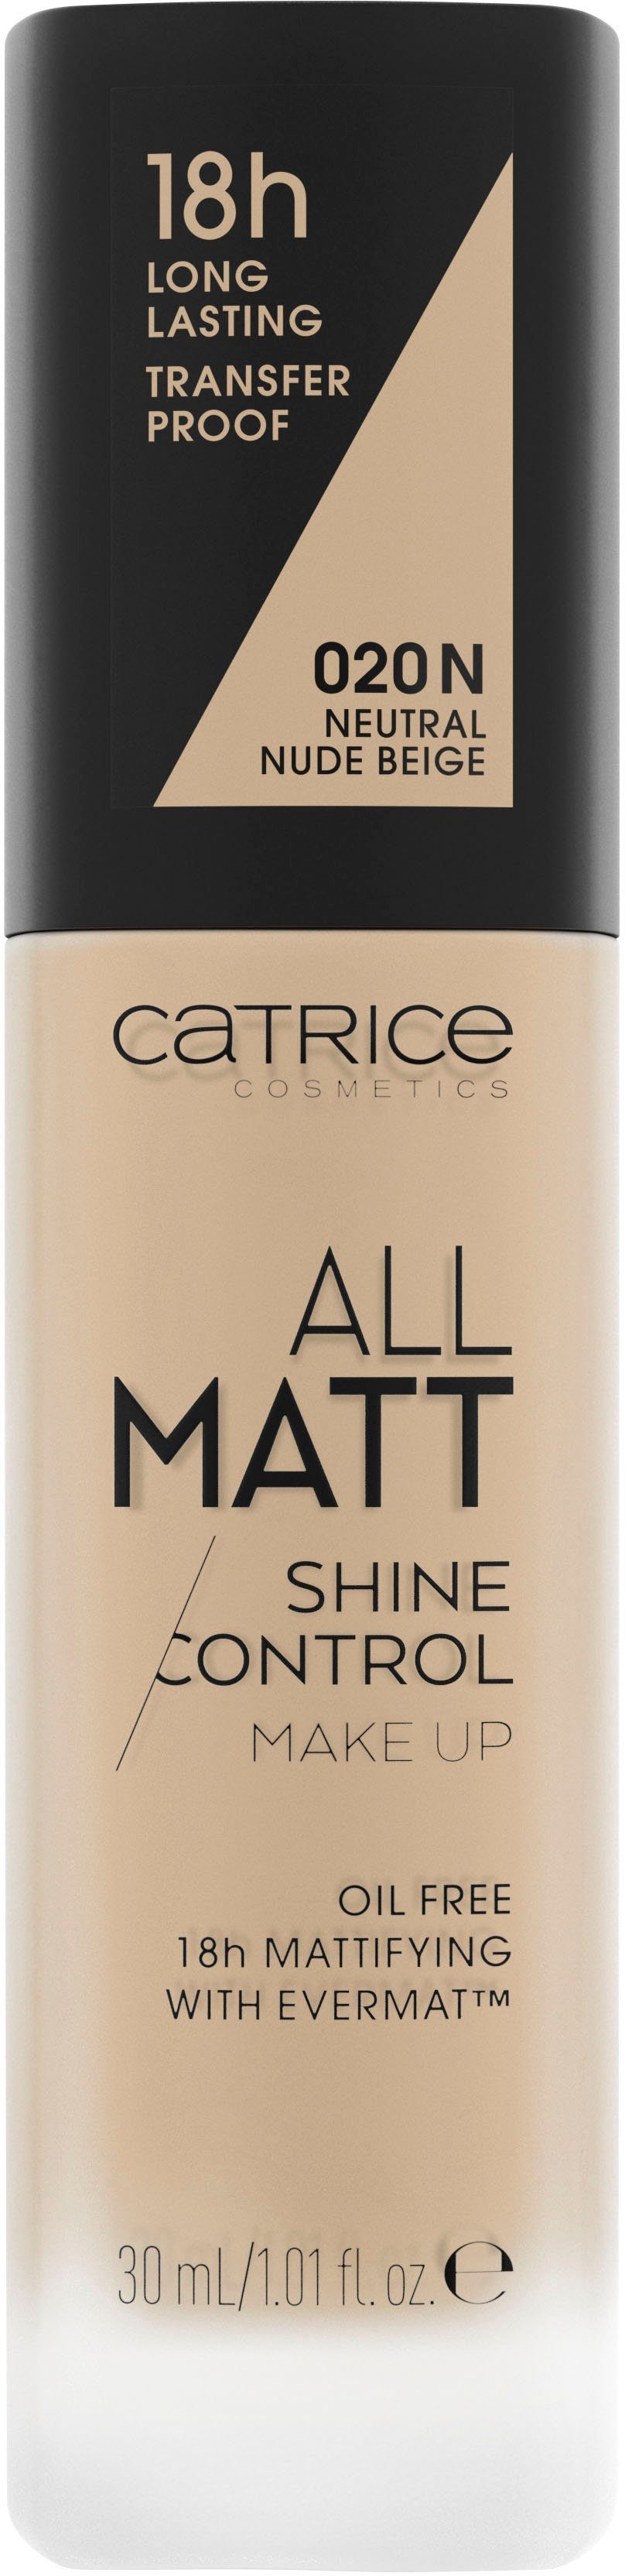 Shine Catrice Control Make Up Foundation Neutral All Matt Nude Beige